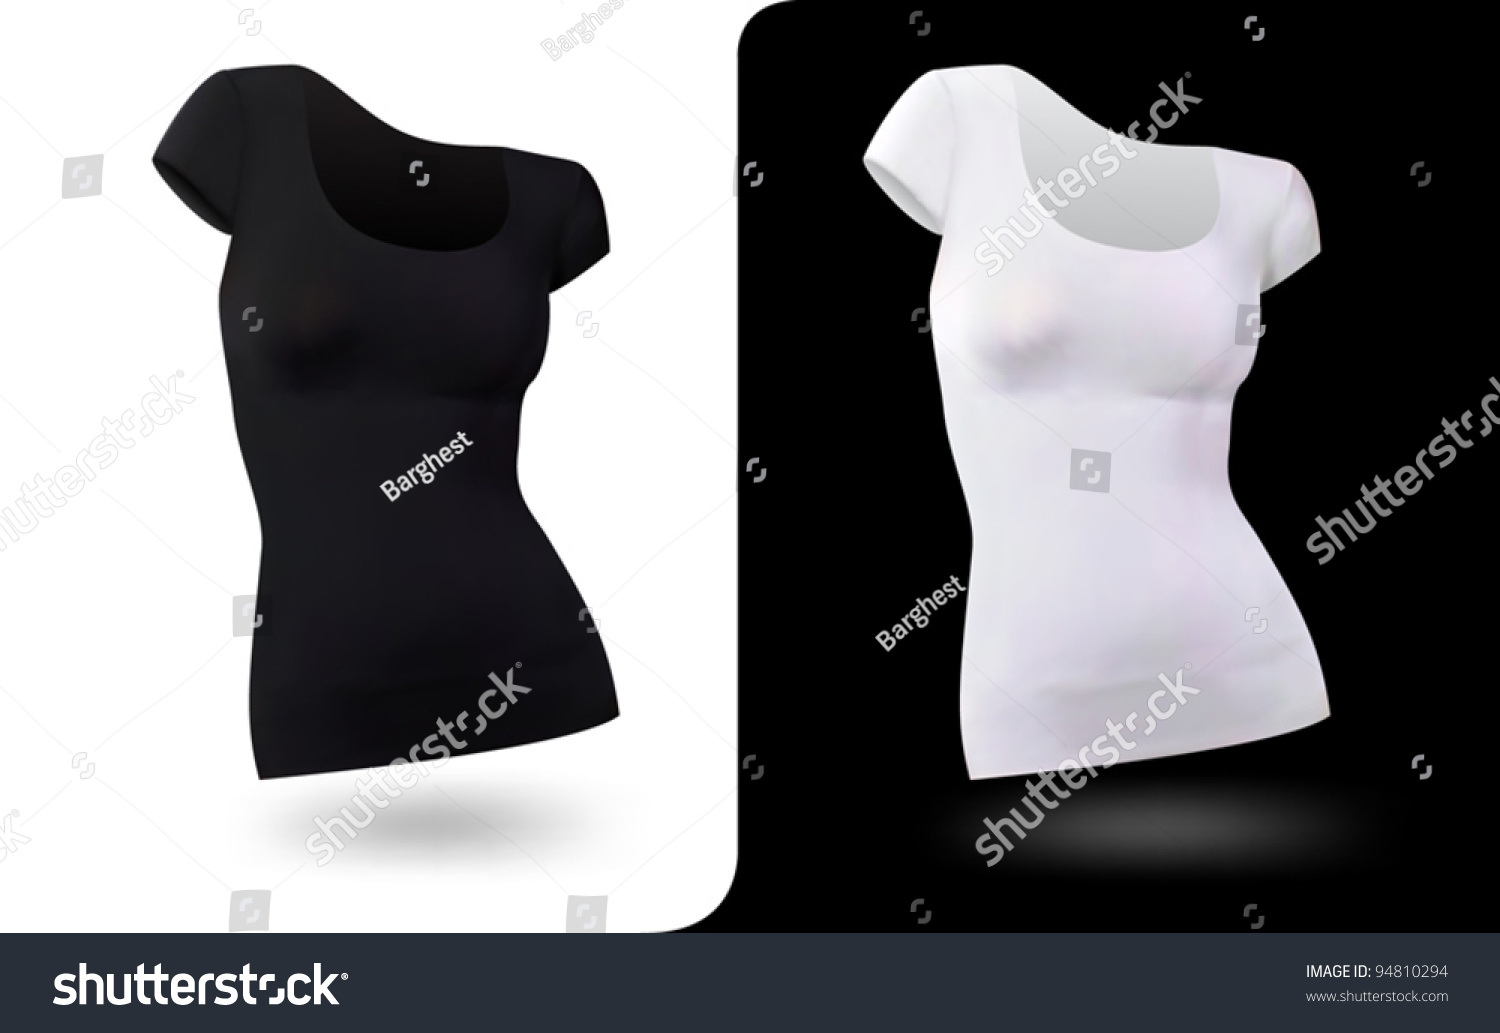 Women Tshirt Template Photorealistic Mesh Design Stock Vector 94810294 ...